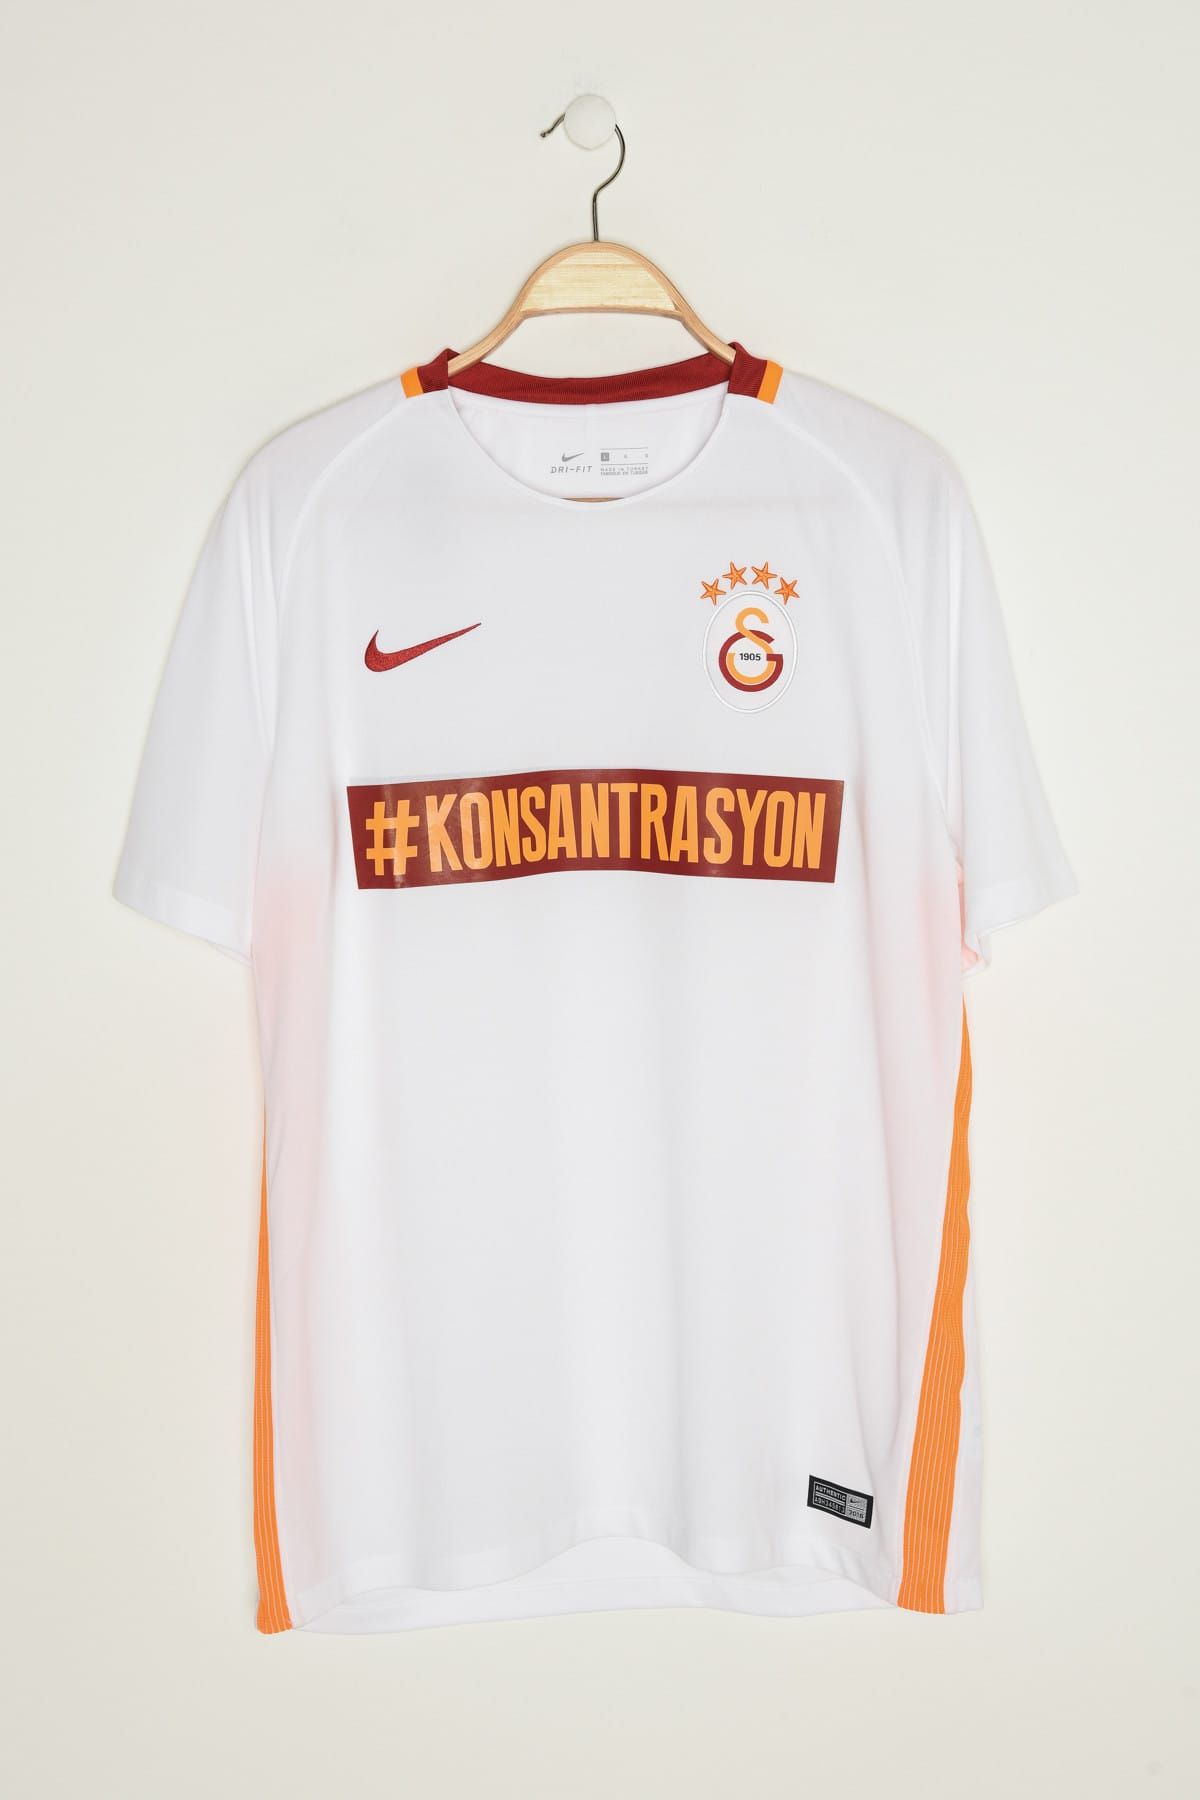 Galatasaray Galatasaray Erkek Konsantrasyon Forma 776869-101